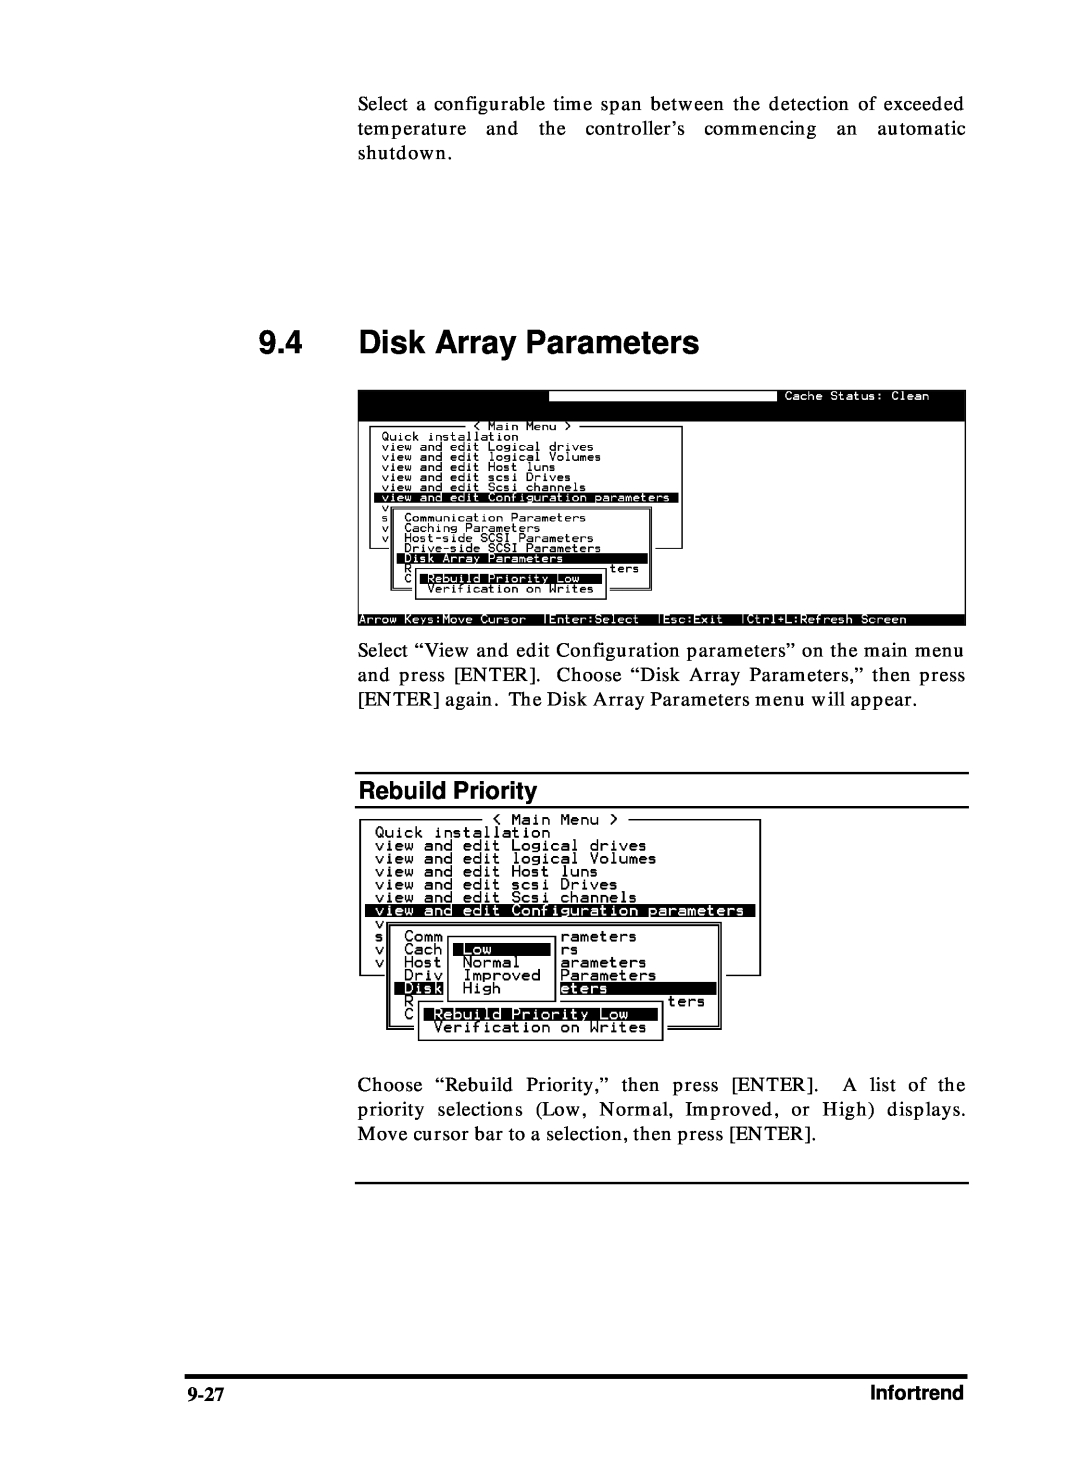 Compaq Infortrend manual Disk Array Parameters, Rebuild Priority 